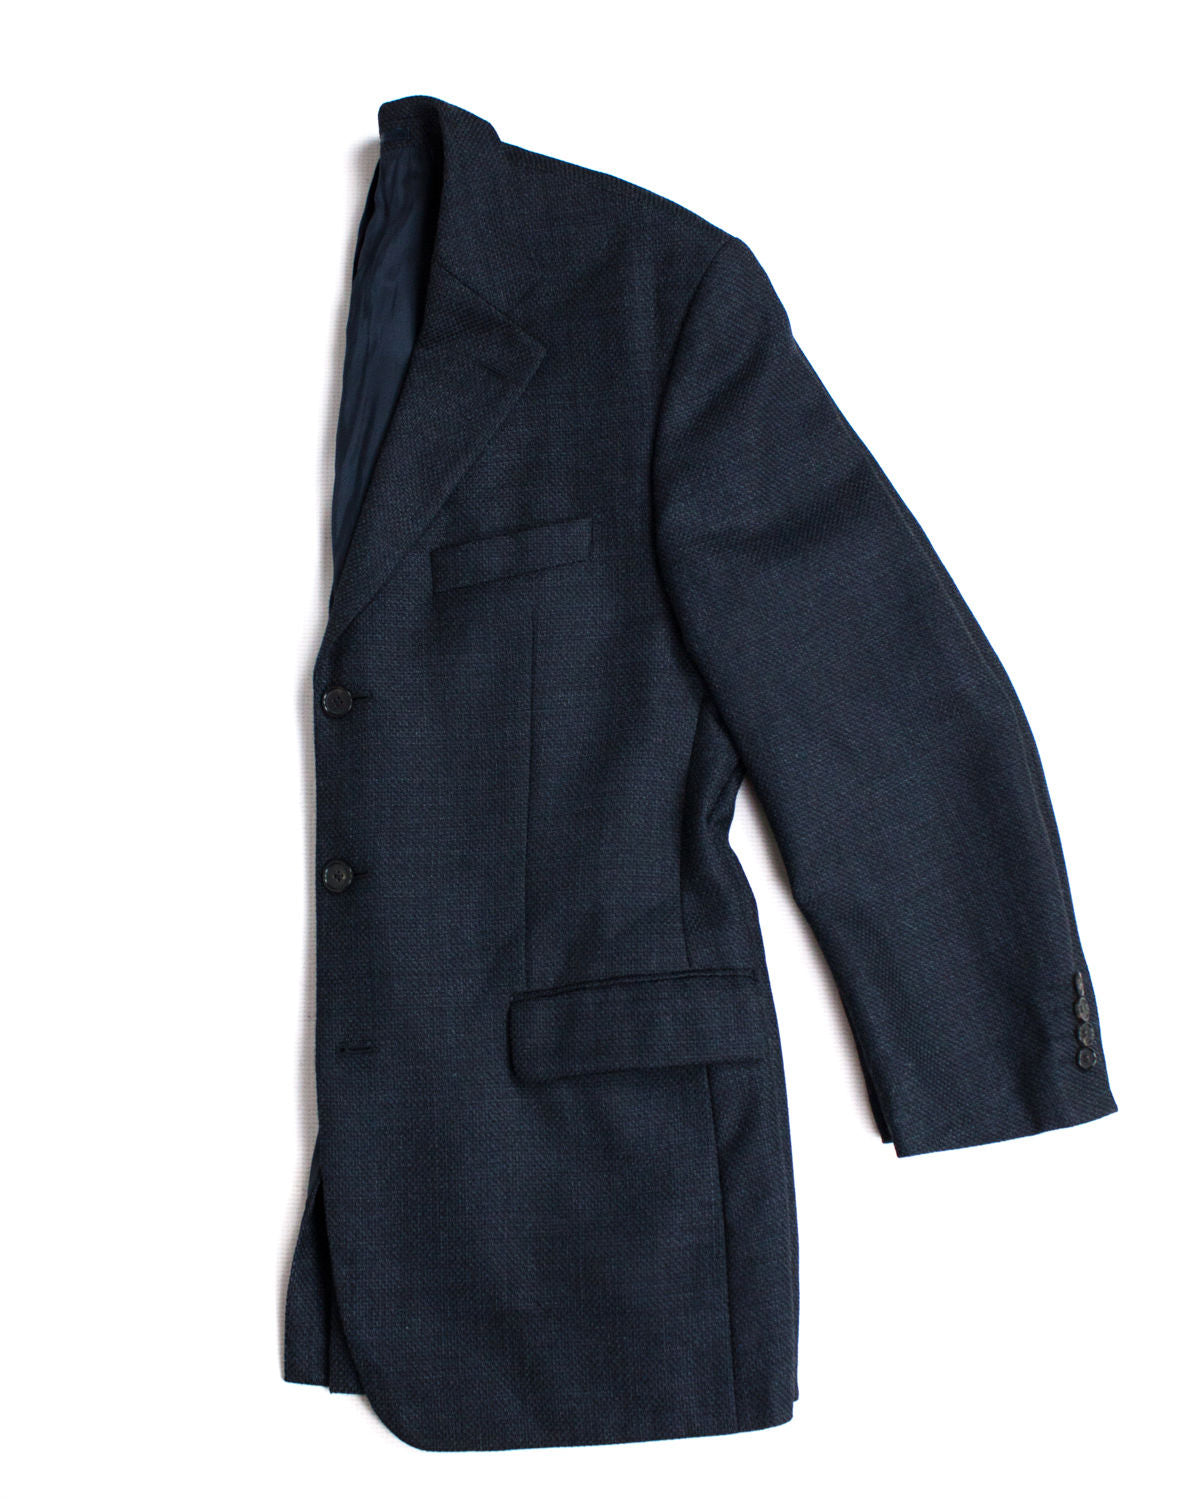 HUGO BOSS Wool & Silk Blazer, US 42 L/EU 102 - secondfirst